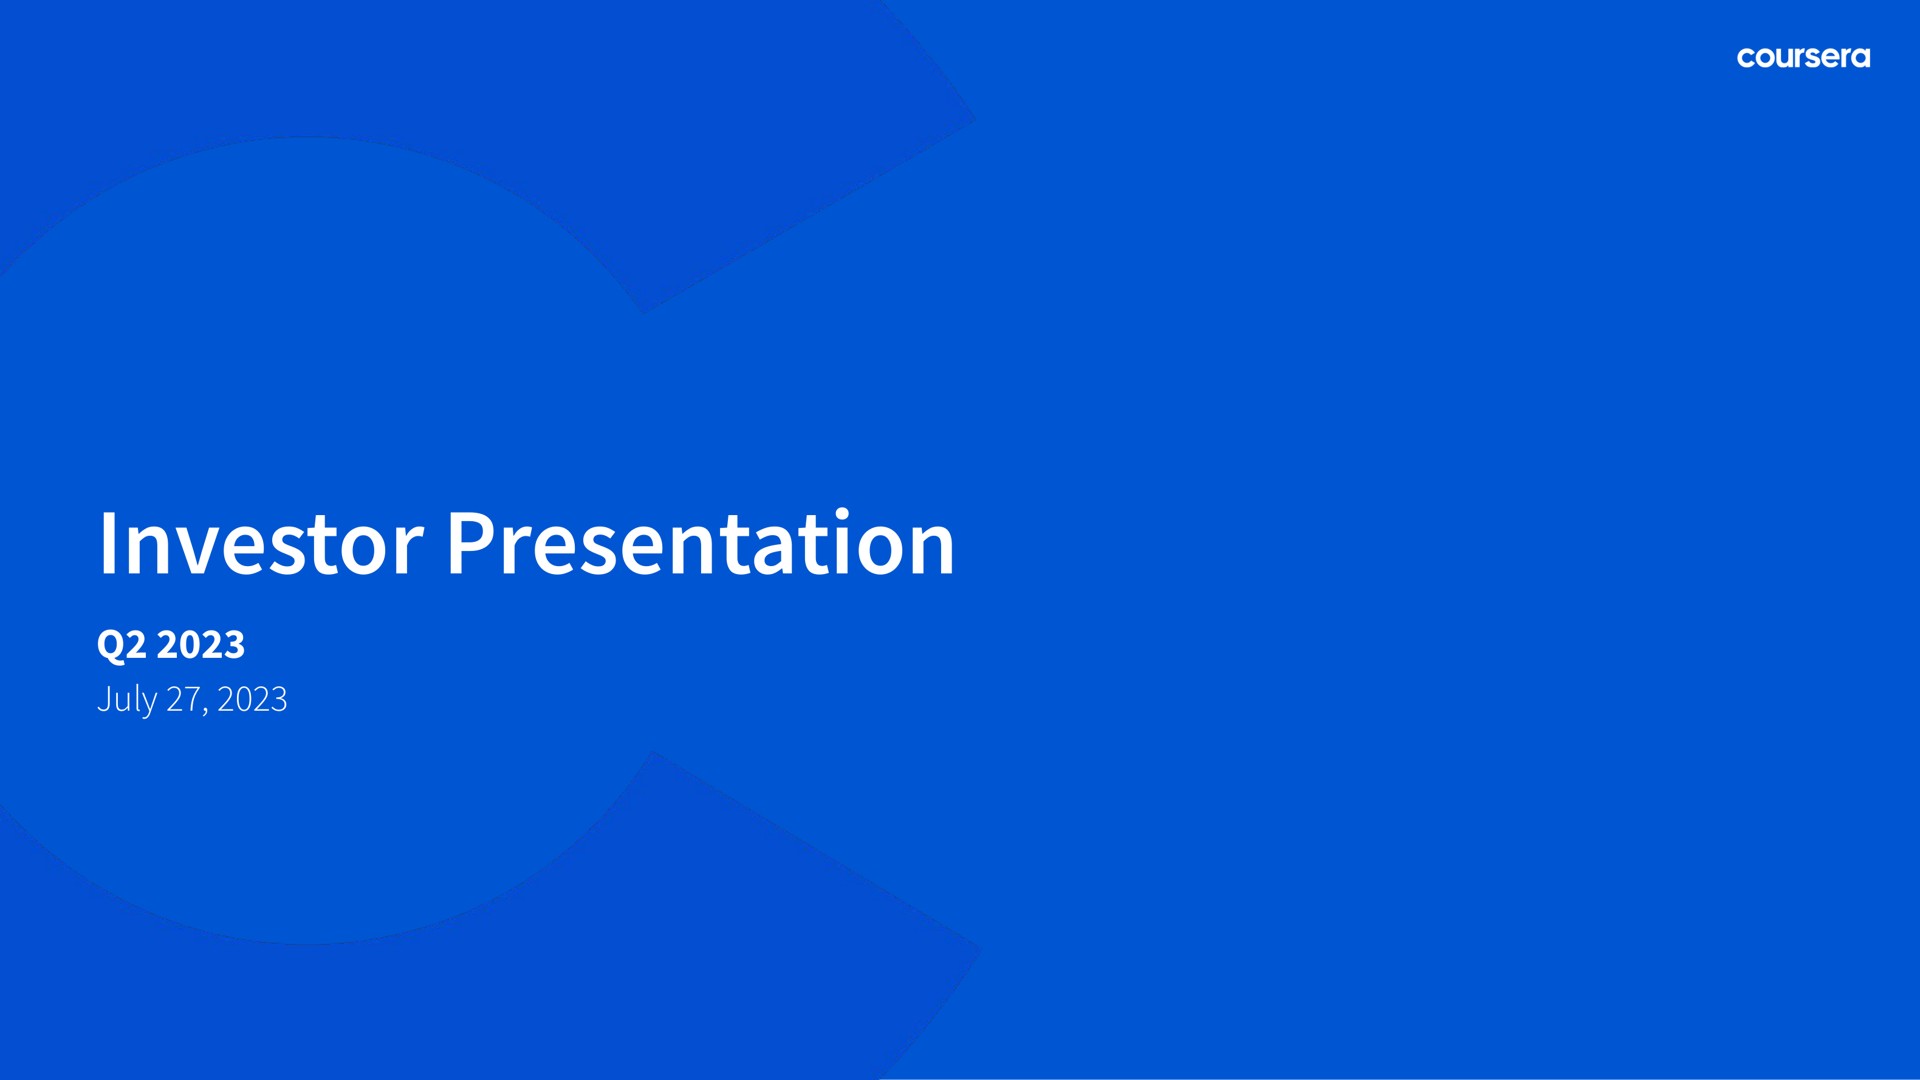 investor presentation | Coursera